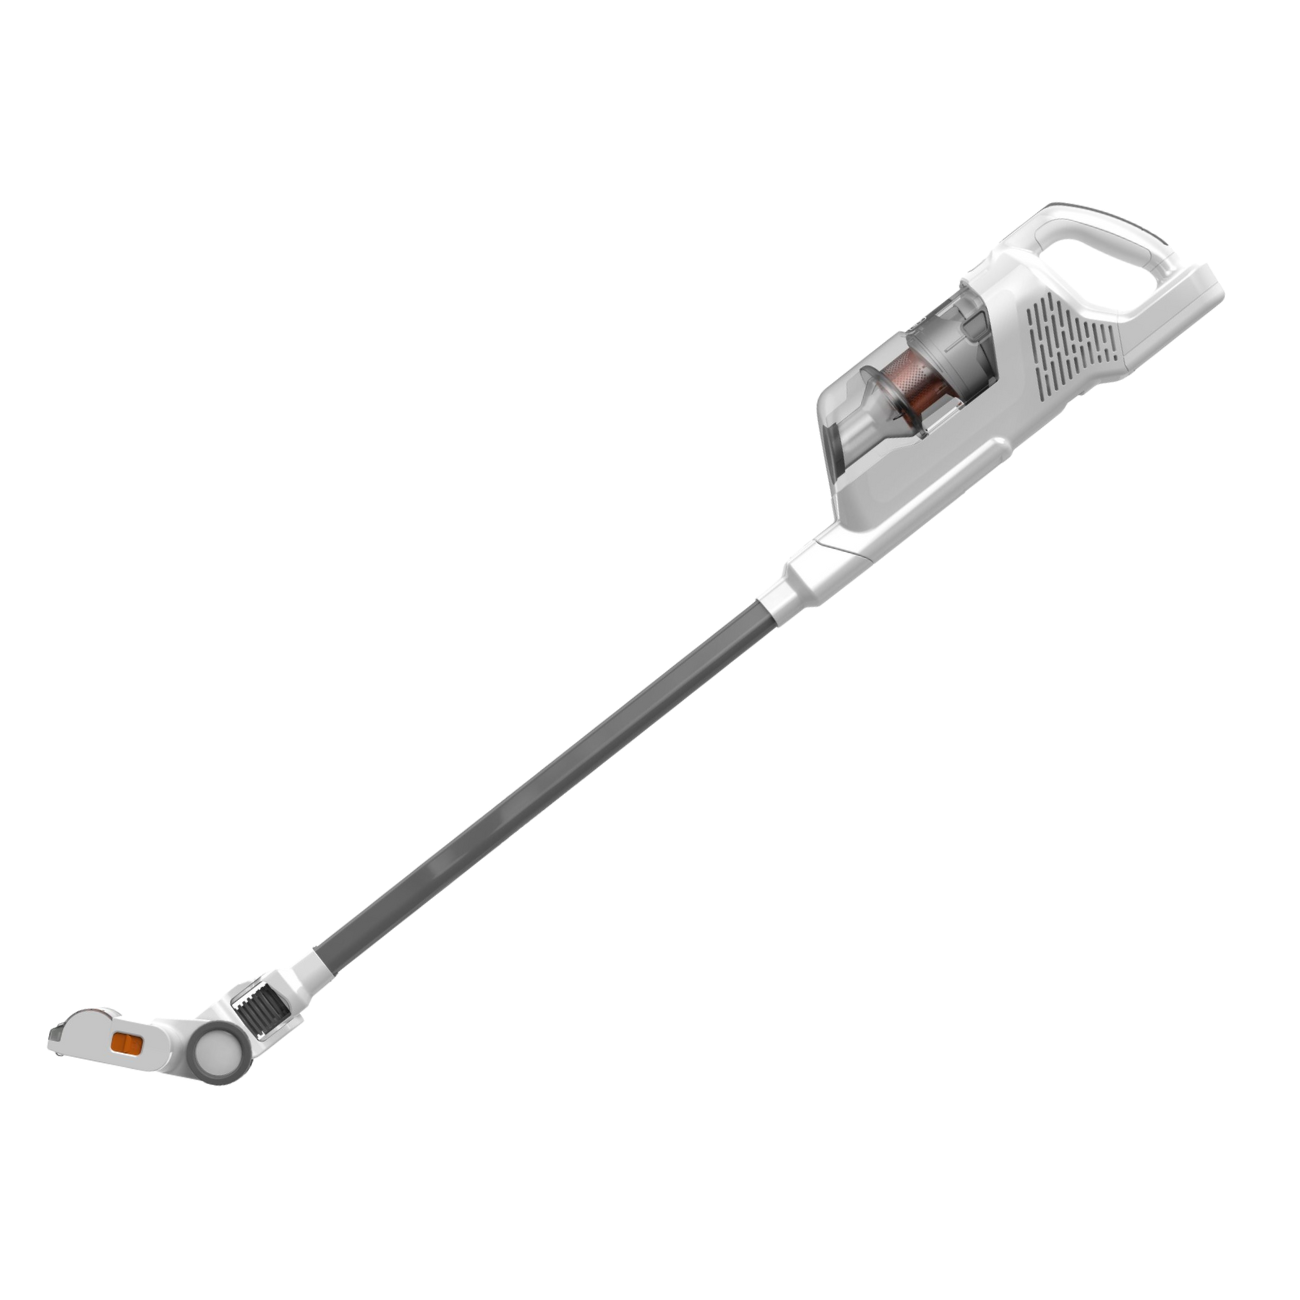 Black & Decker 36V Max Lithium Stick Vacuum with ORA Technology